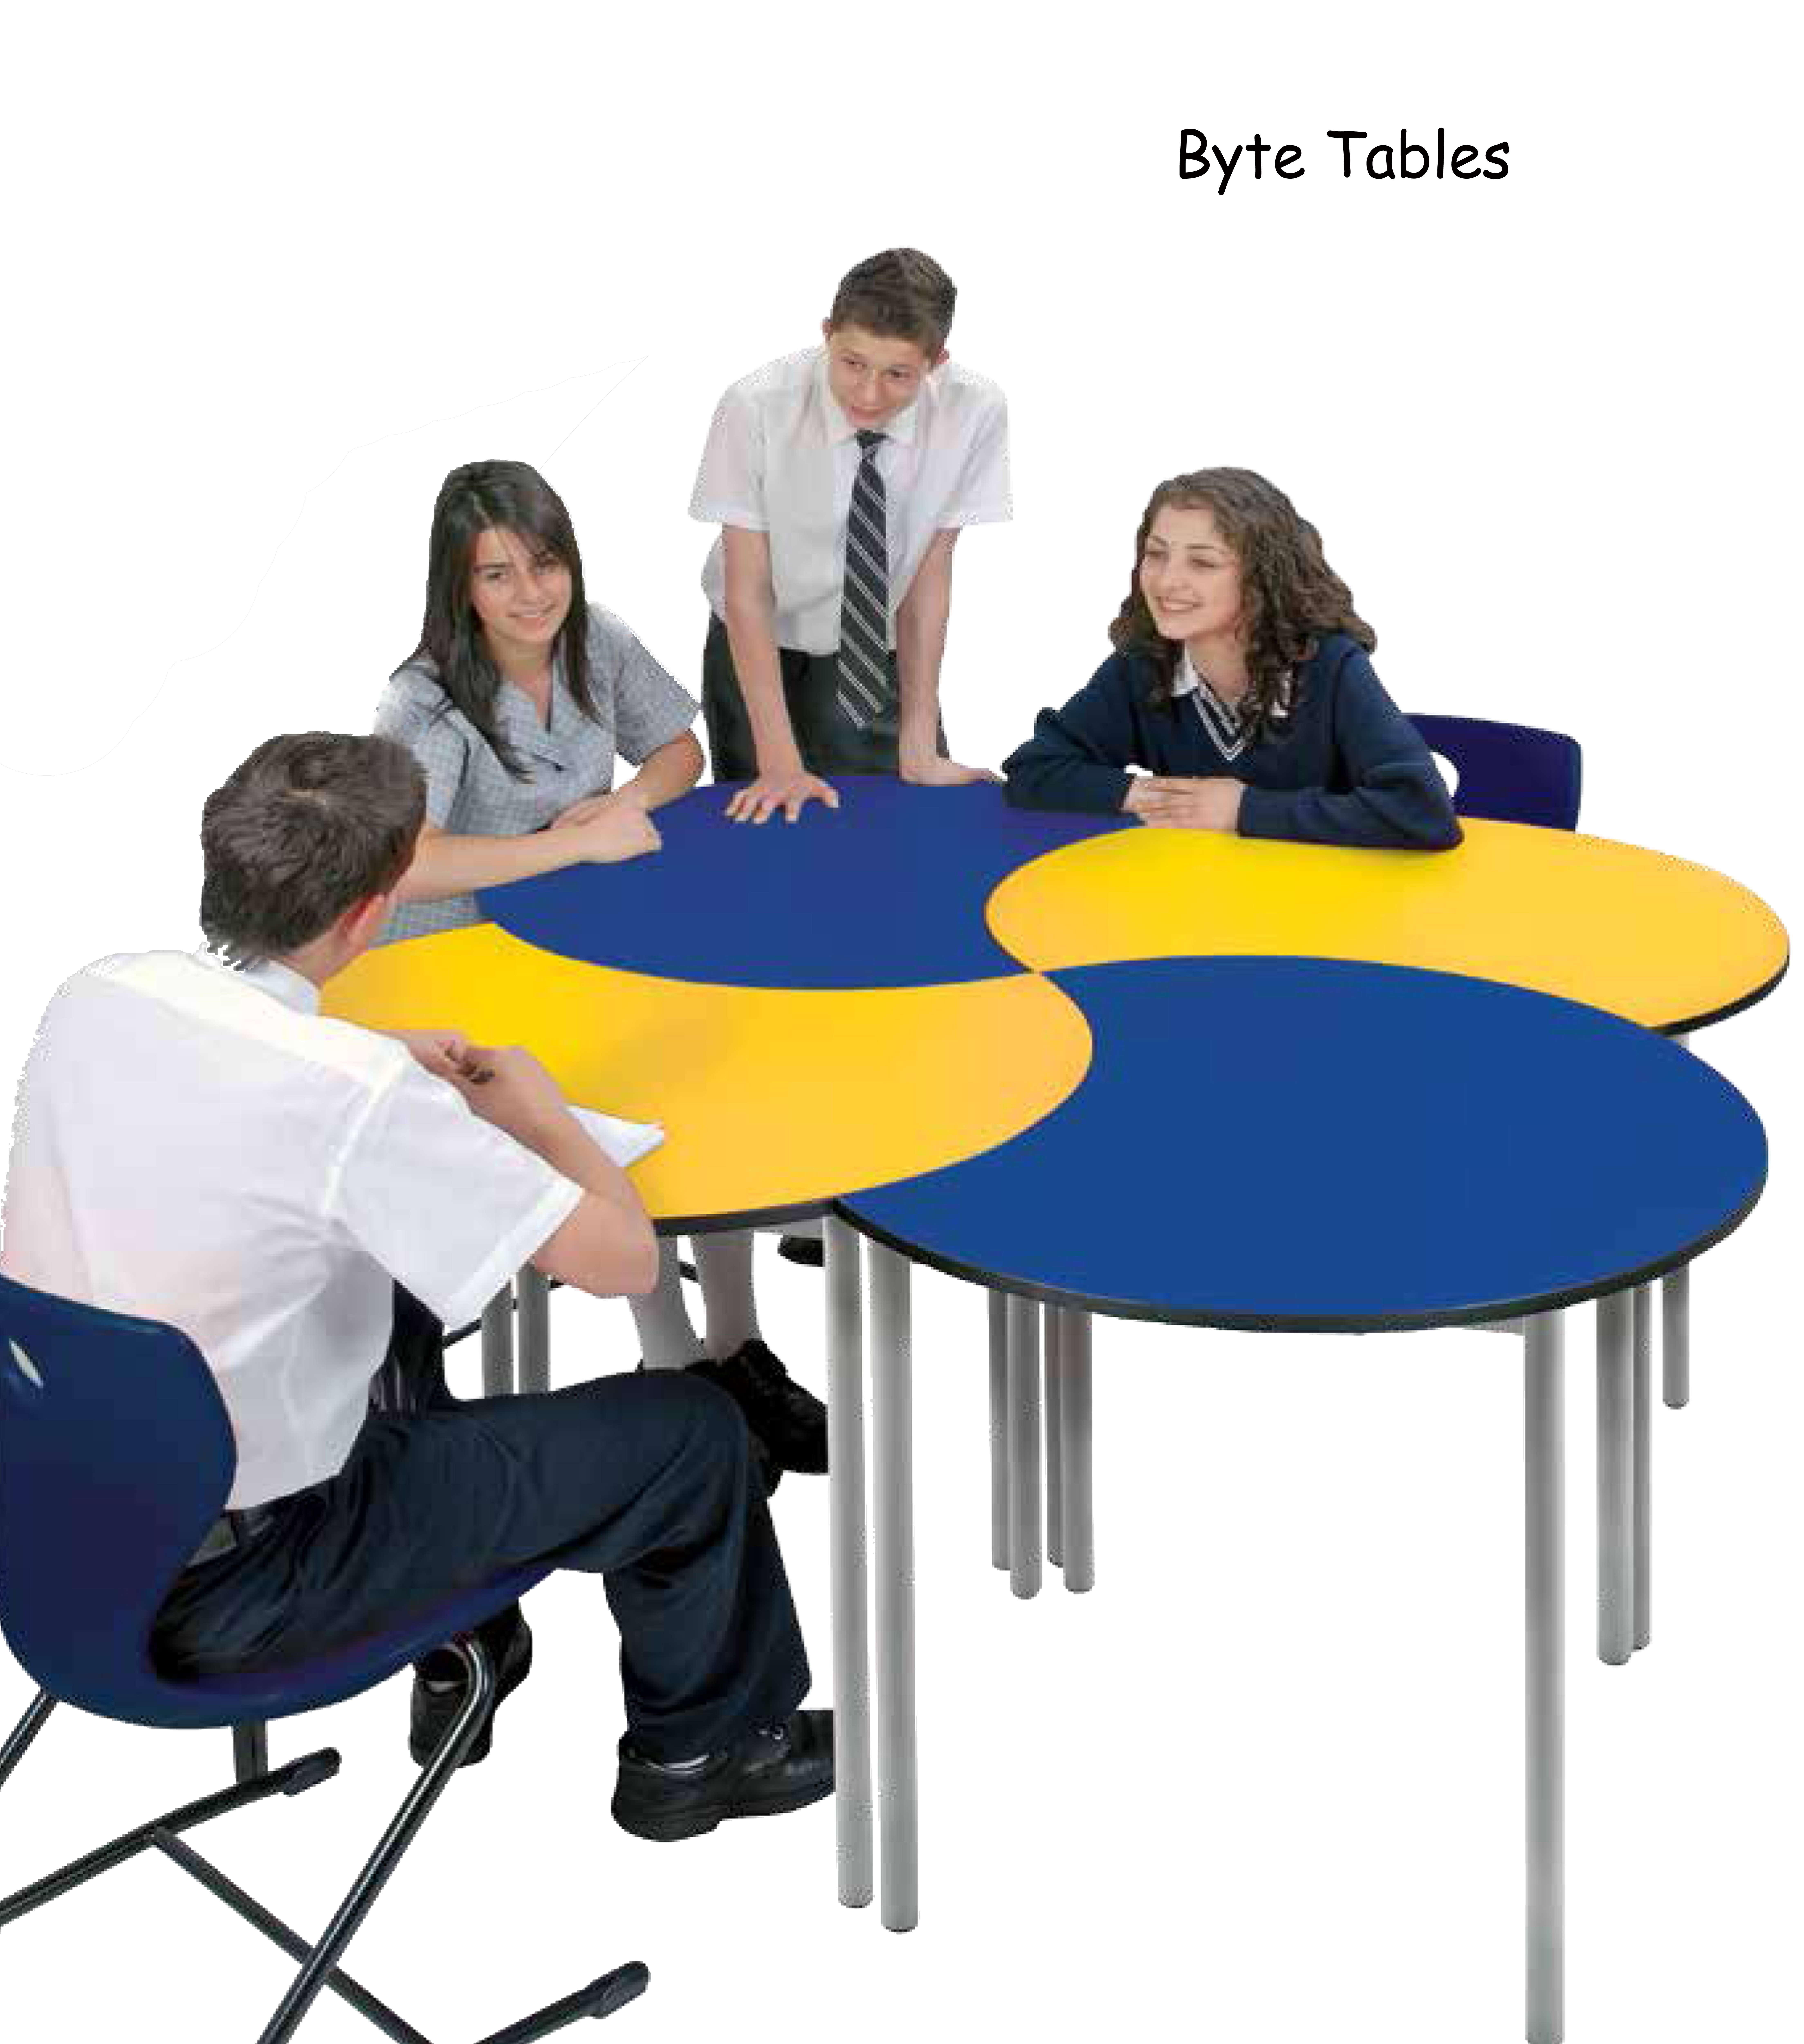 BYTE TABLE